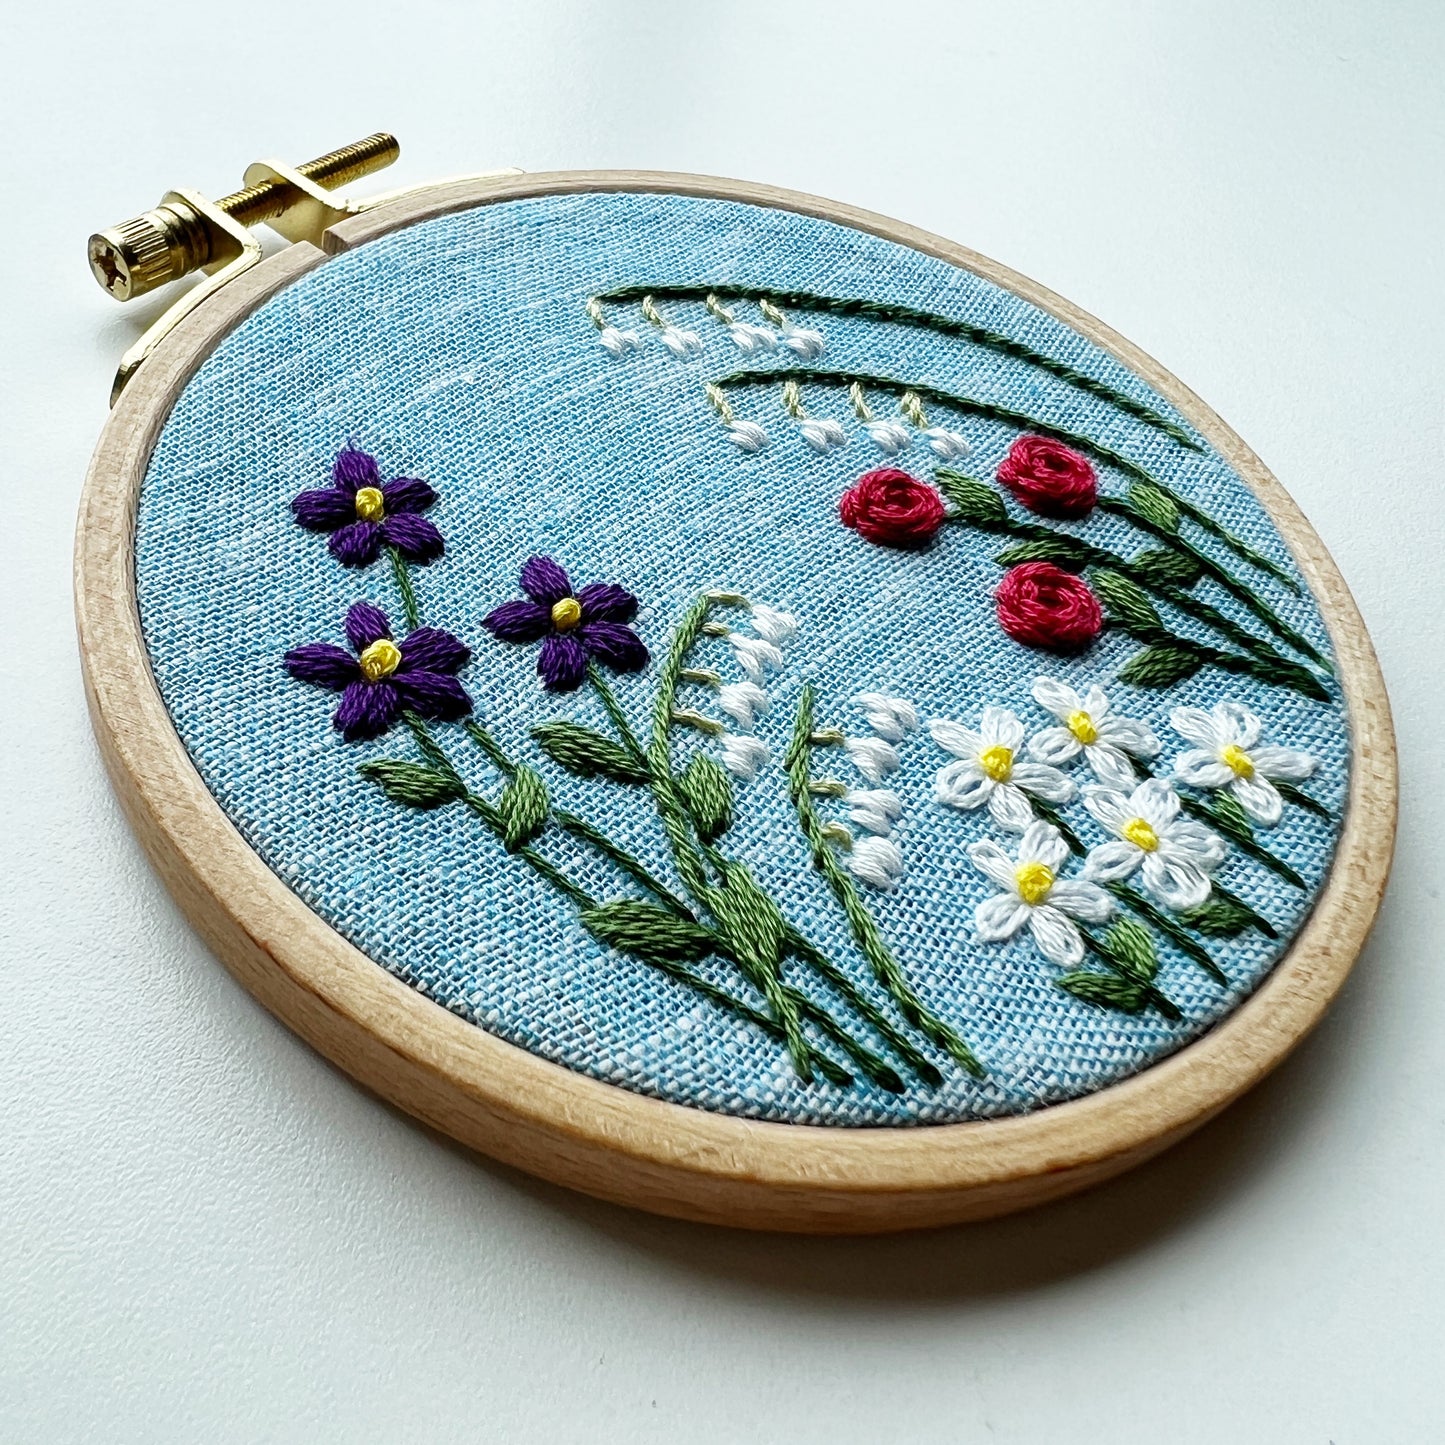 Beginning Hand Embroidery Workshop - Family Flower Garden